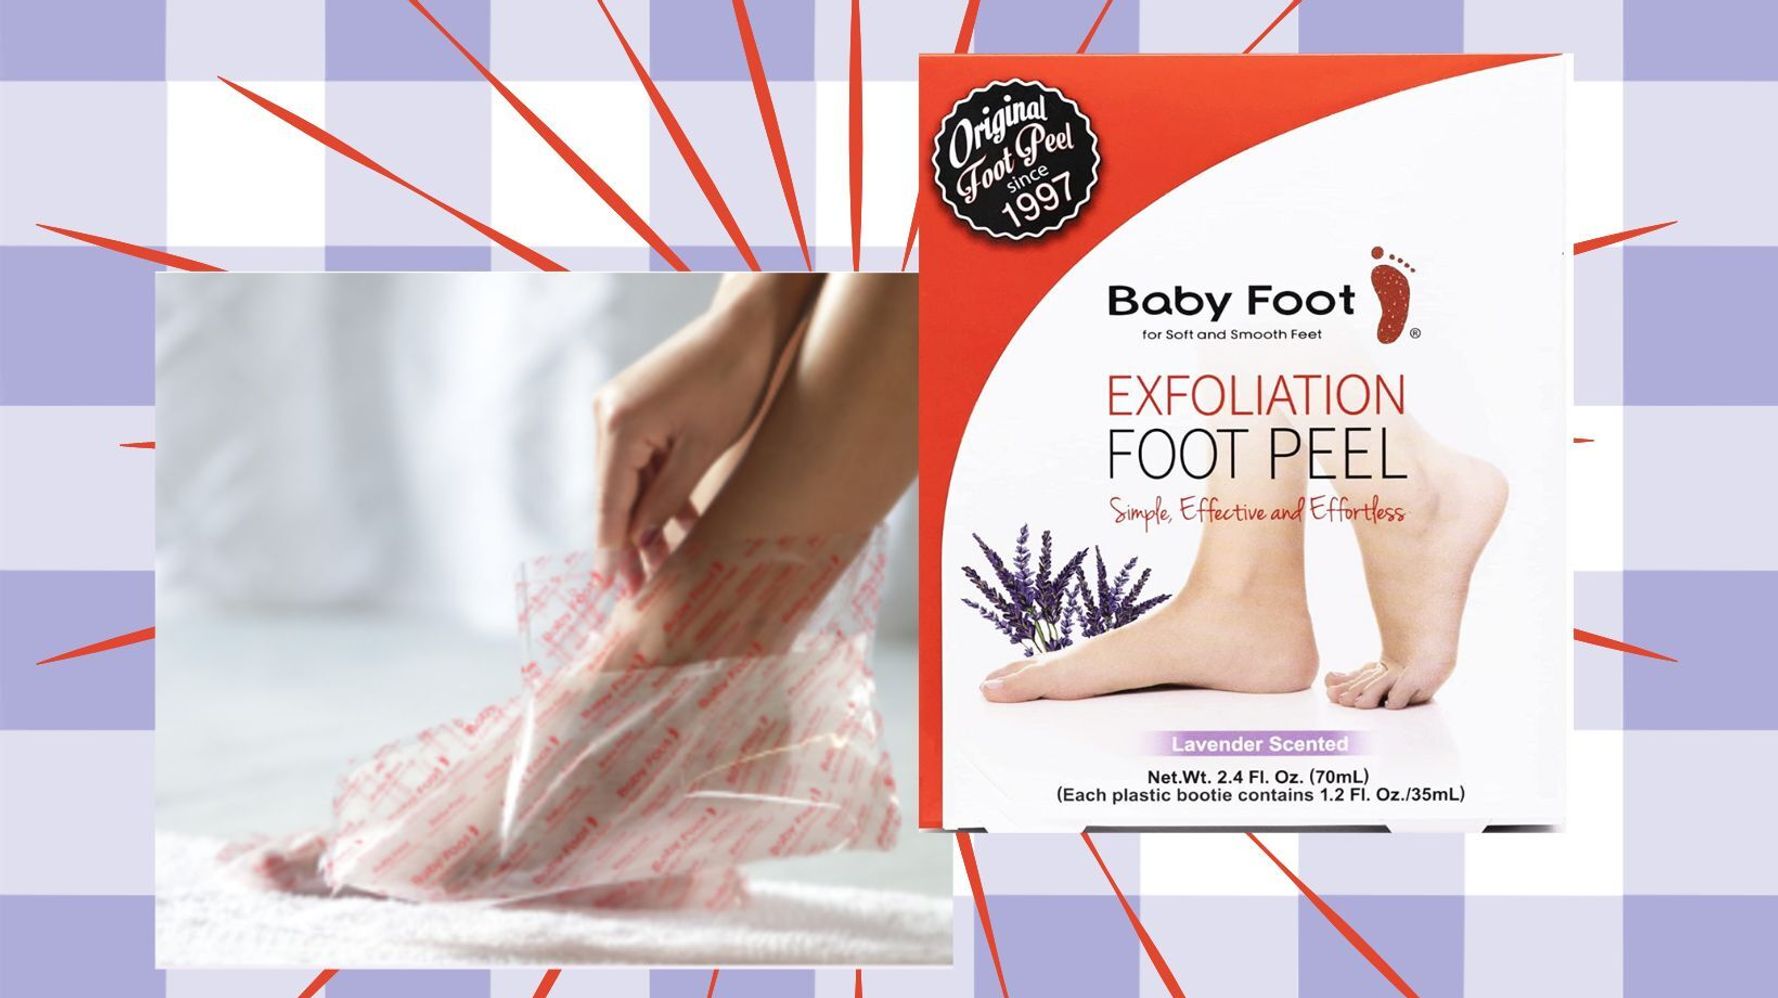 Baby Foot review: We tried the cult-favorite foot peel